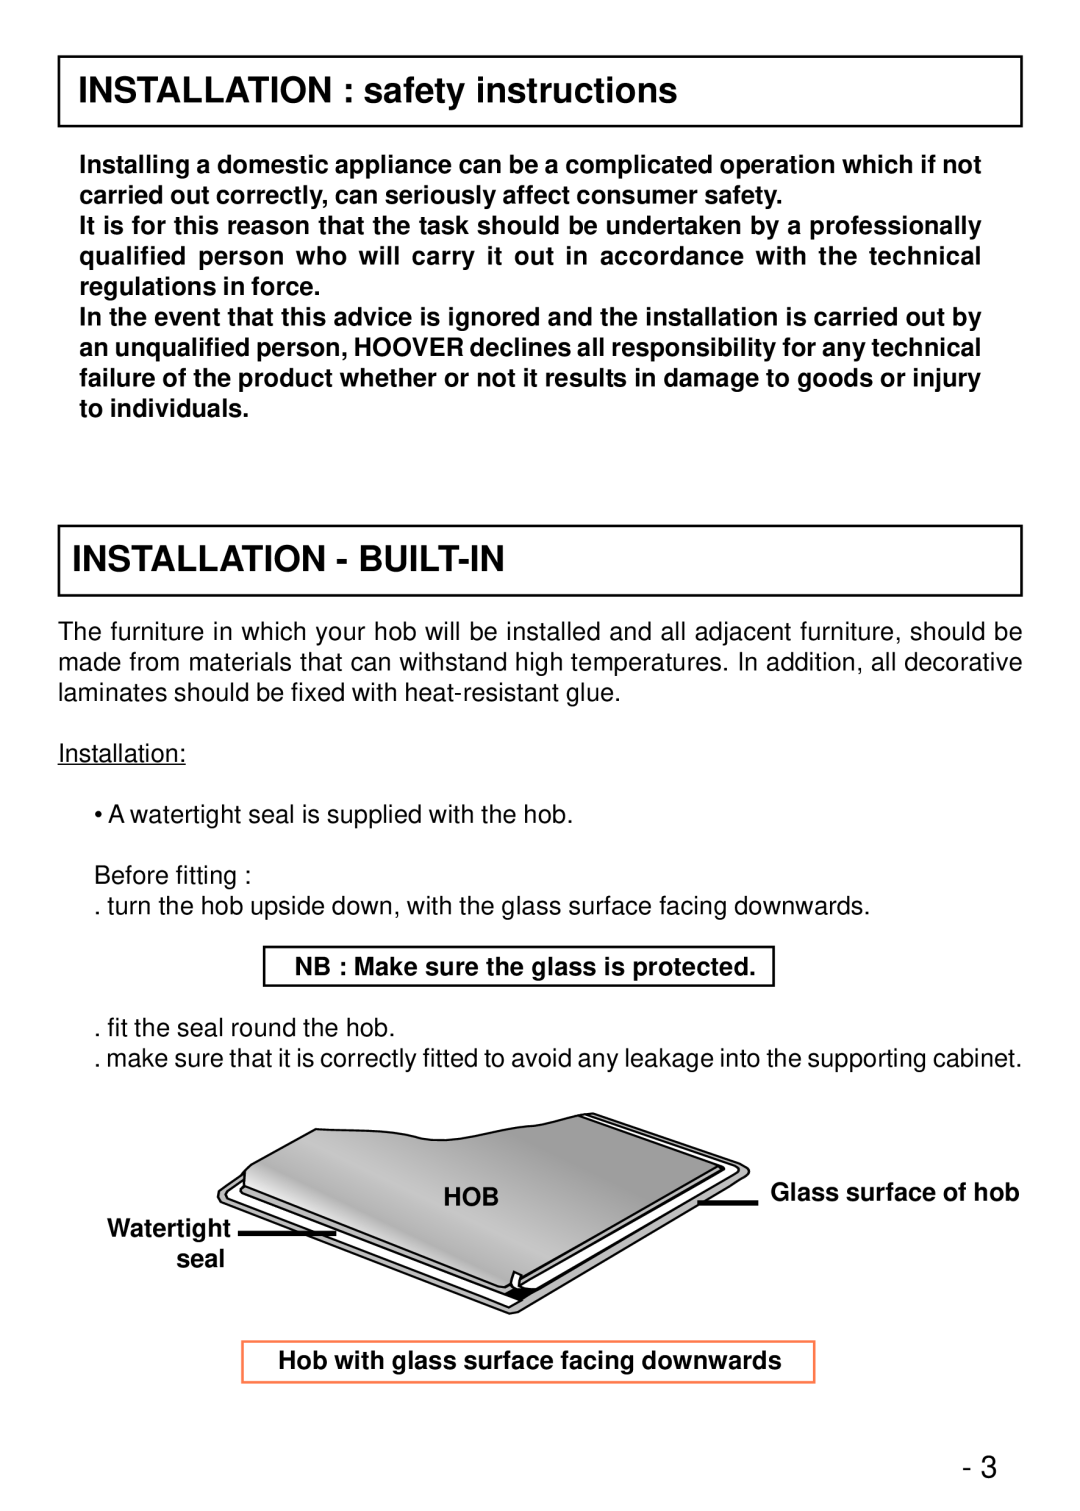 Hoover HVK 400 manual INSTALLATION safety instructions, Installation - Built-In 